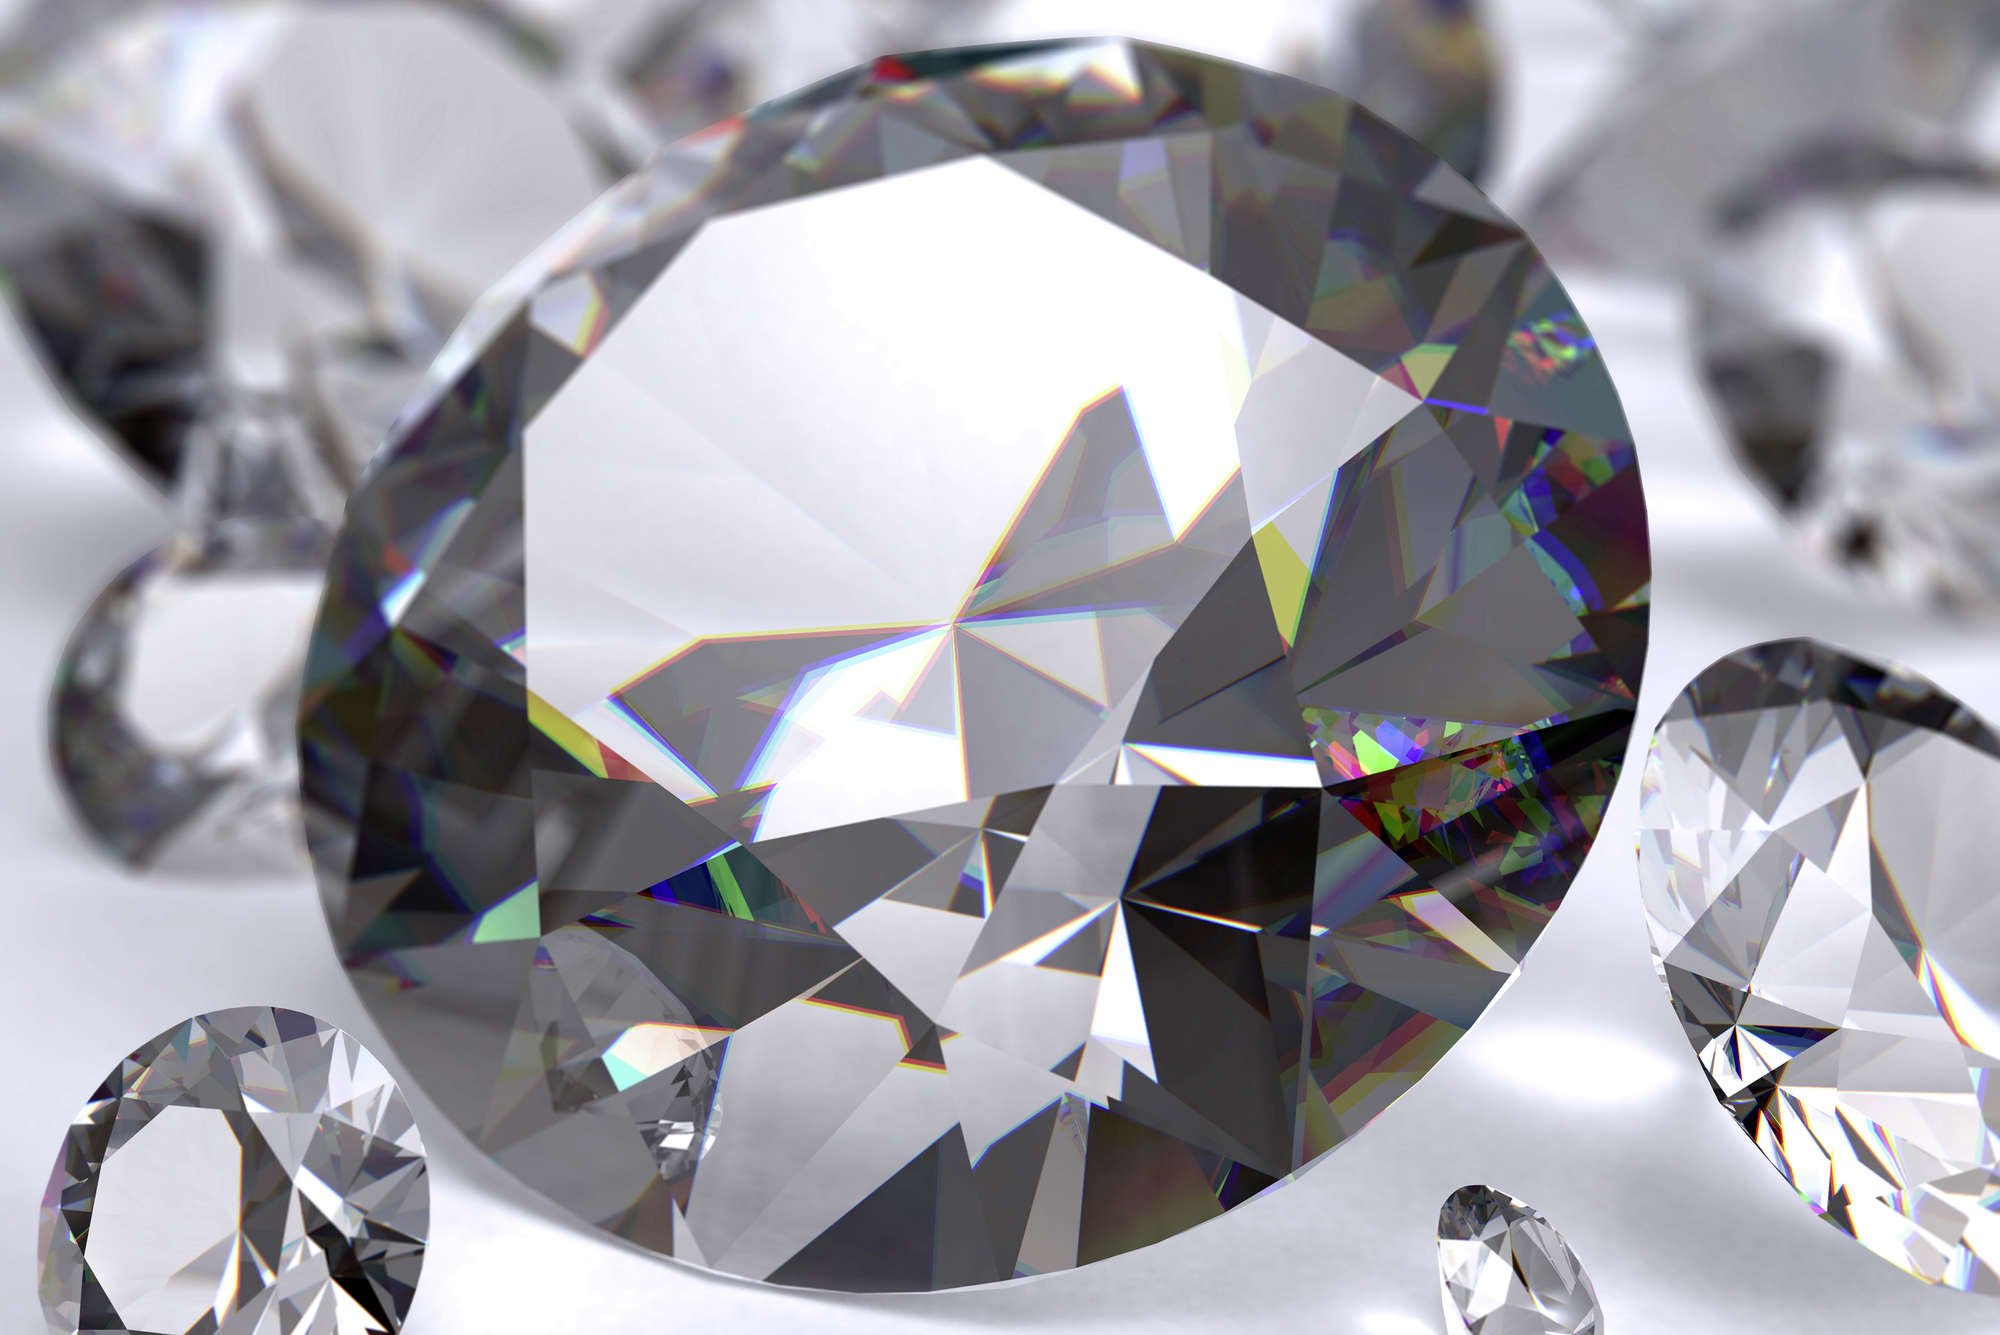             Fototapete großer Diamant – Perlmutt Glattvlies
        